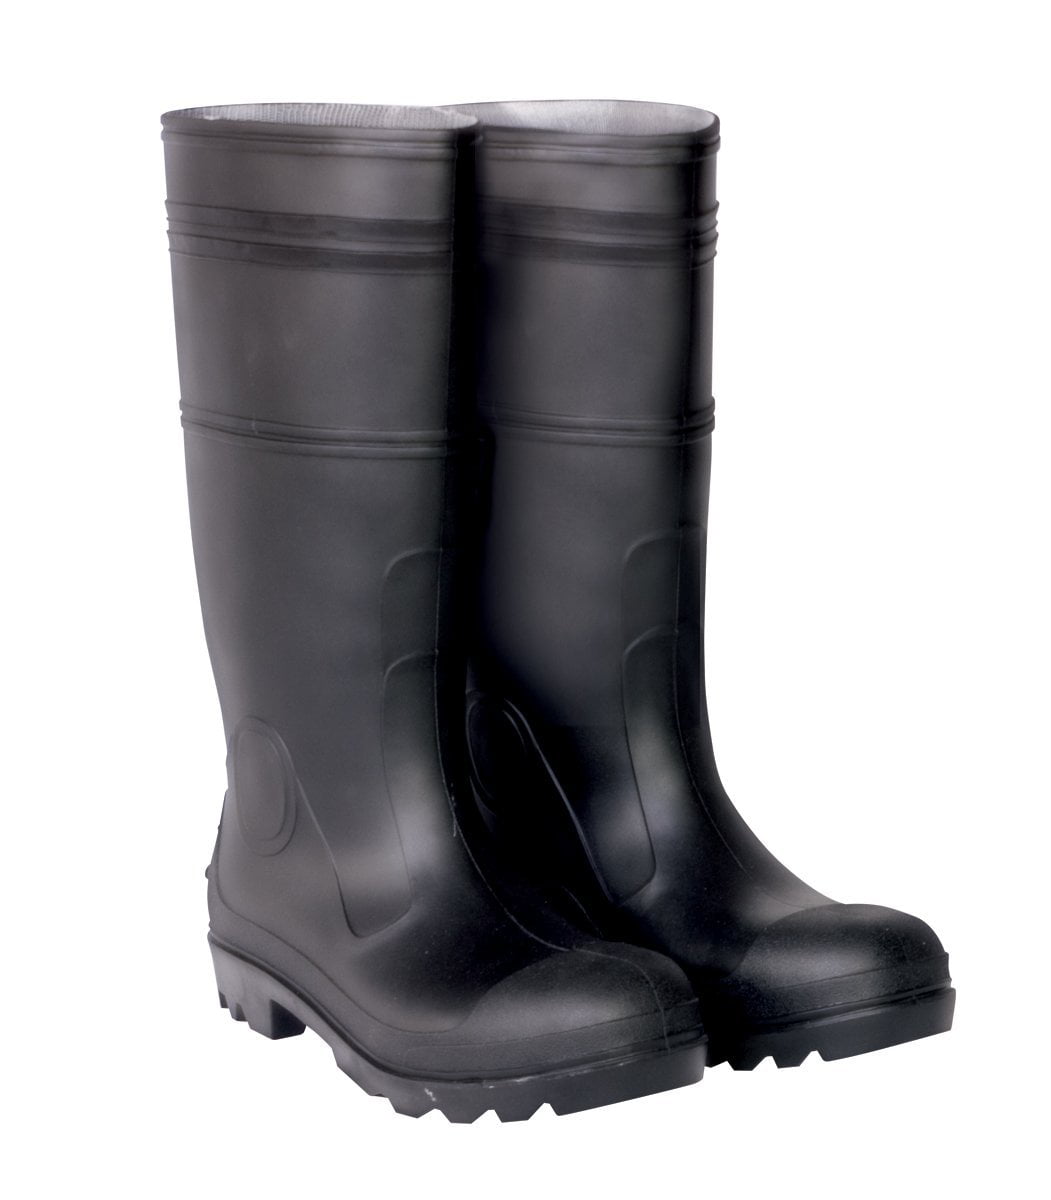 Servus Comfort Technology 14" PVC Soft Toe Men's Work Boots Black 